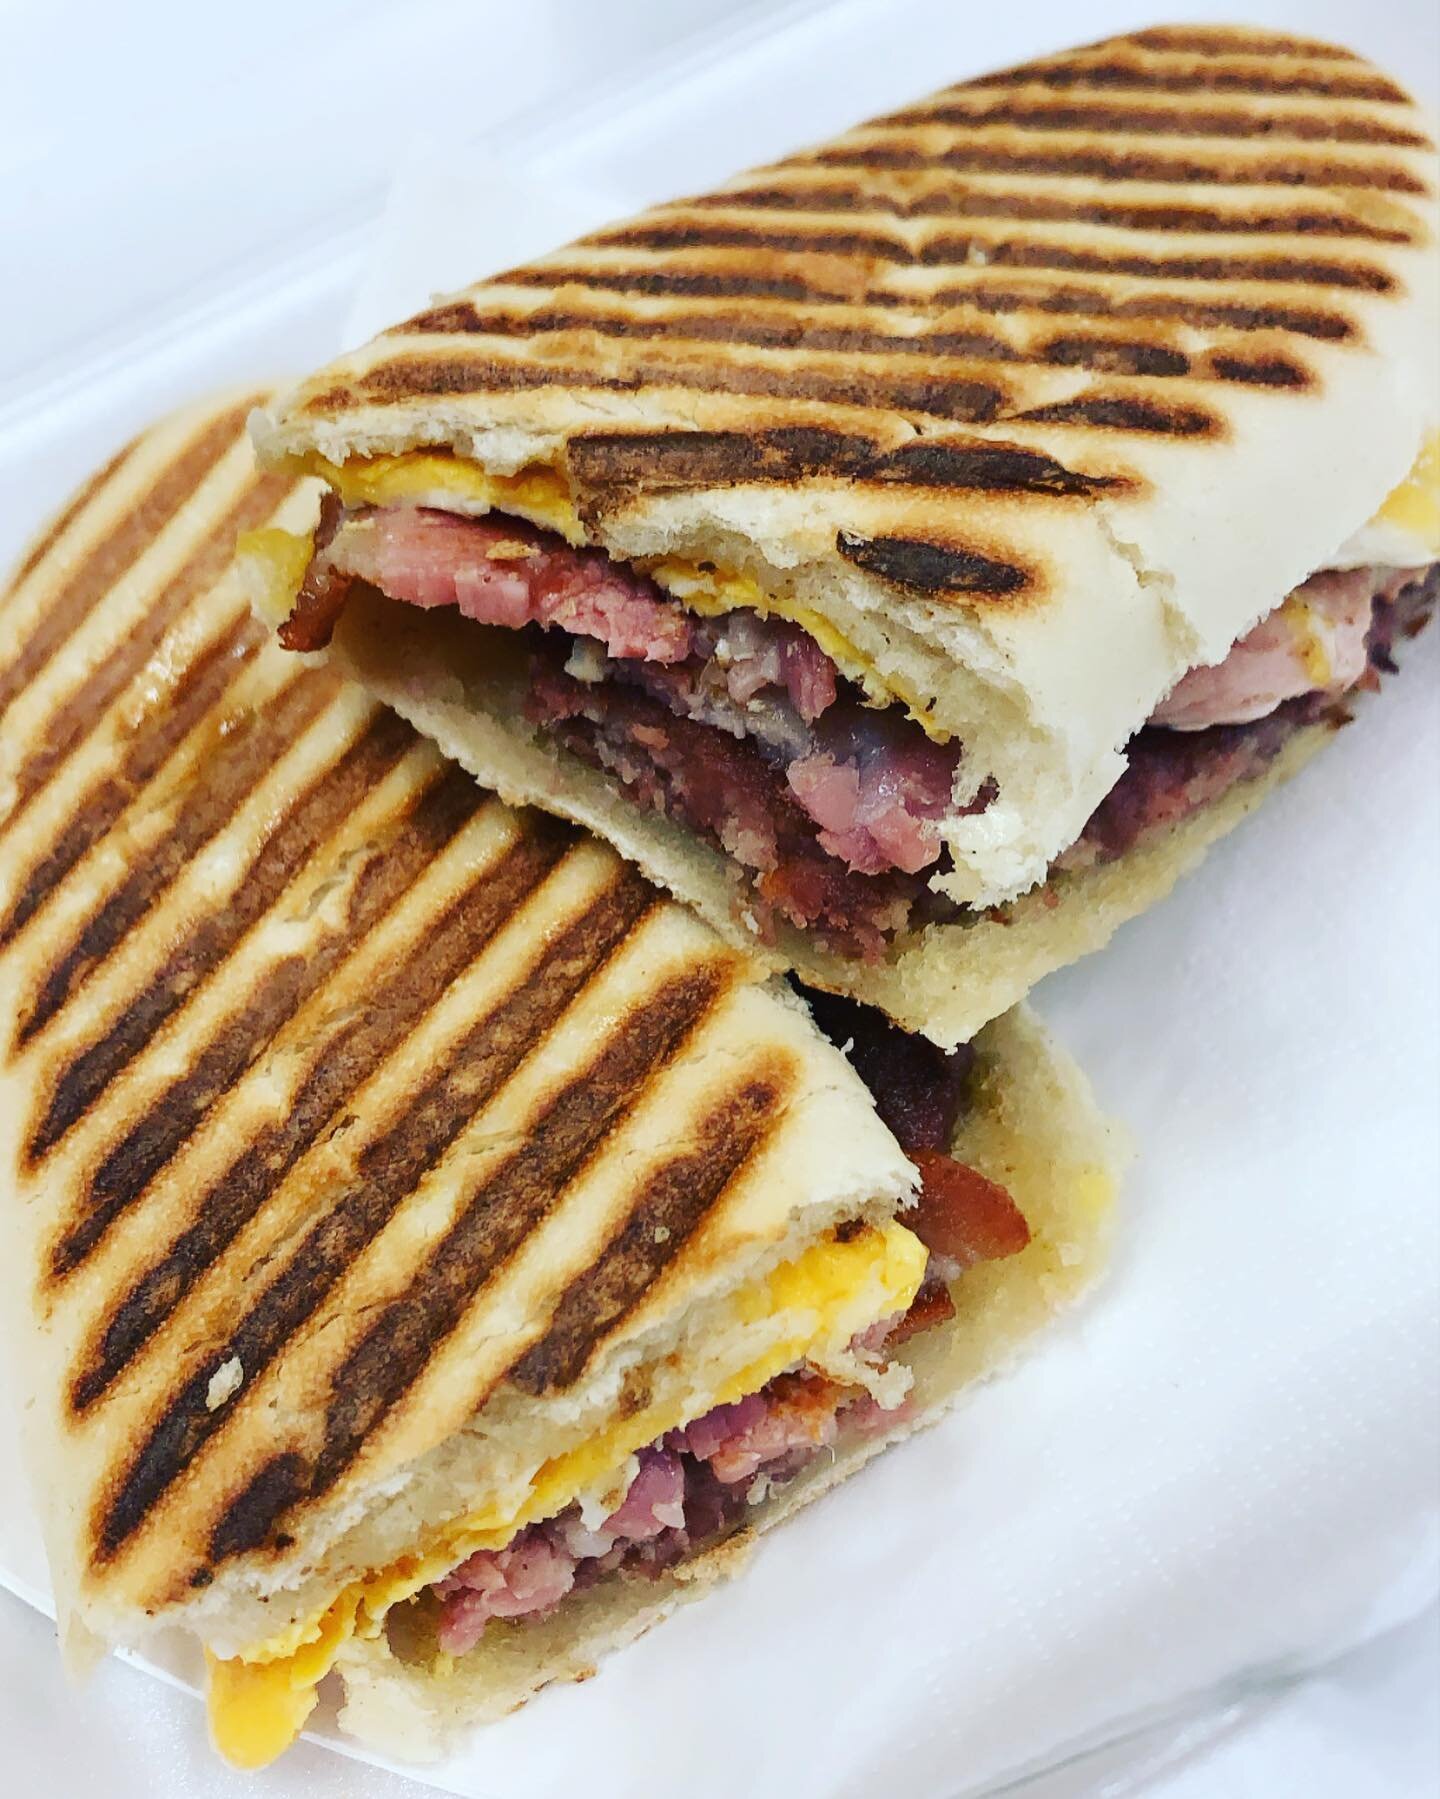 #breakfastpanini #bacon #egg #sausage #cheese #panini #bakersandmorebalfron